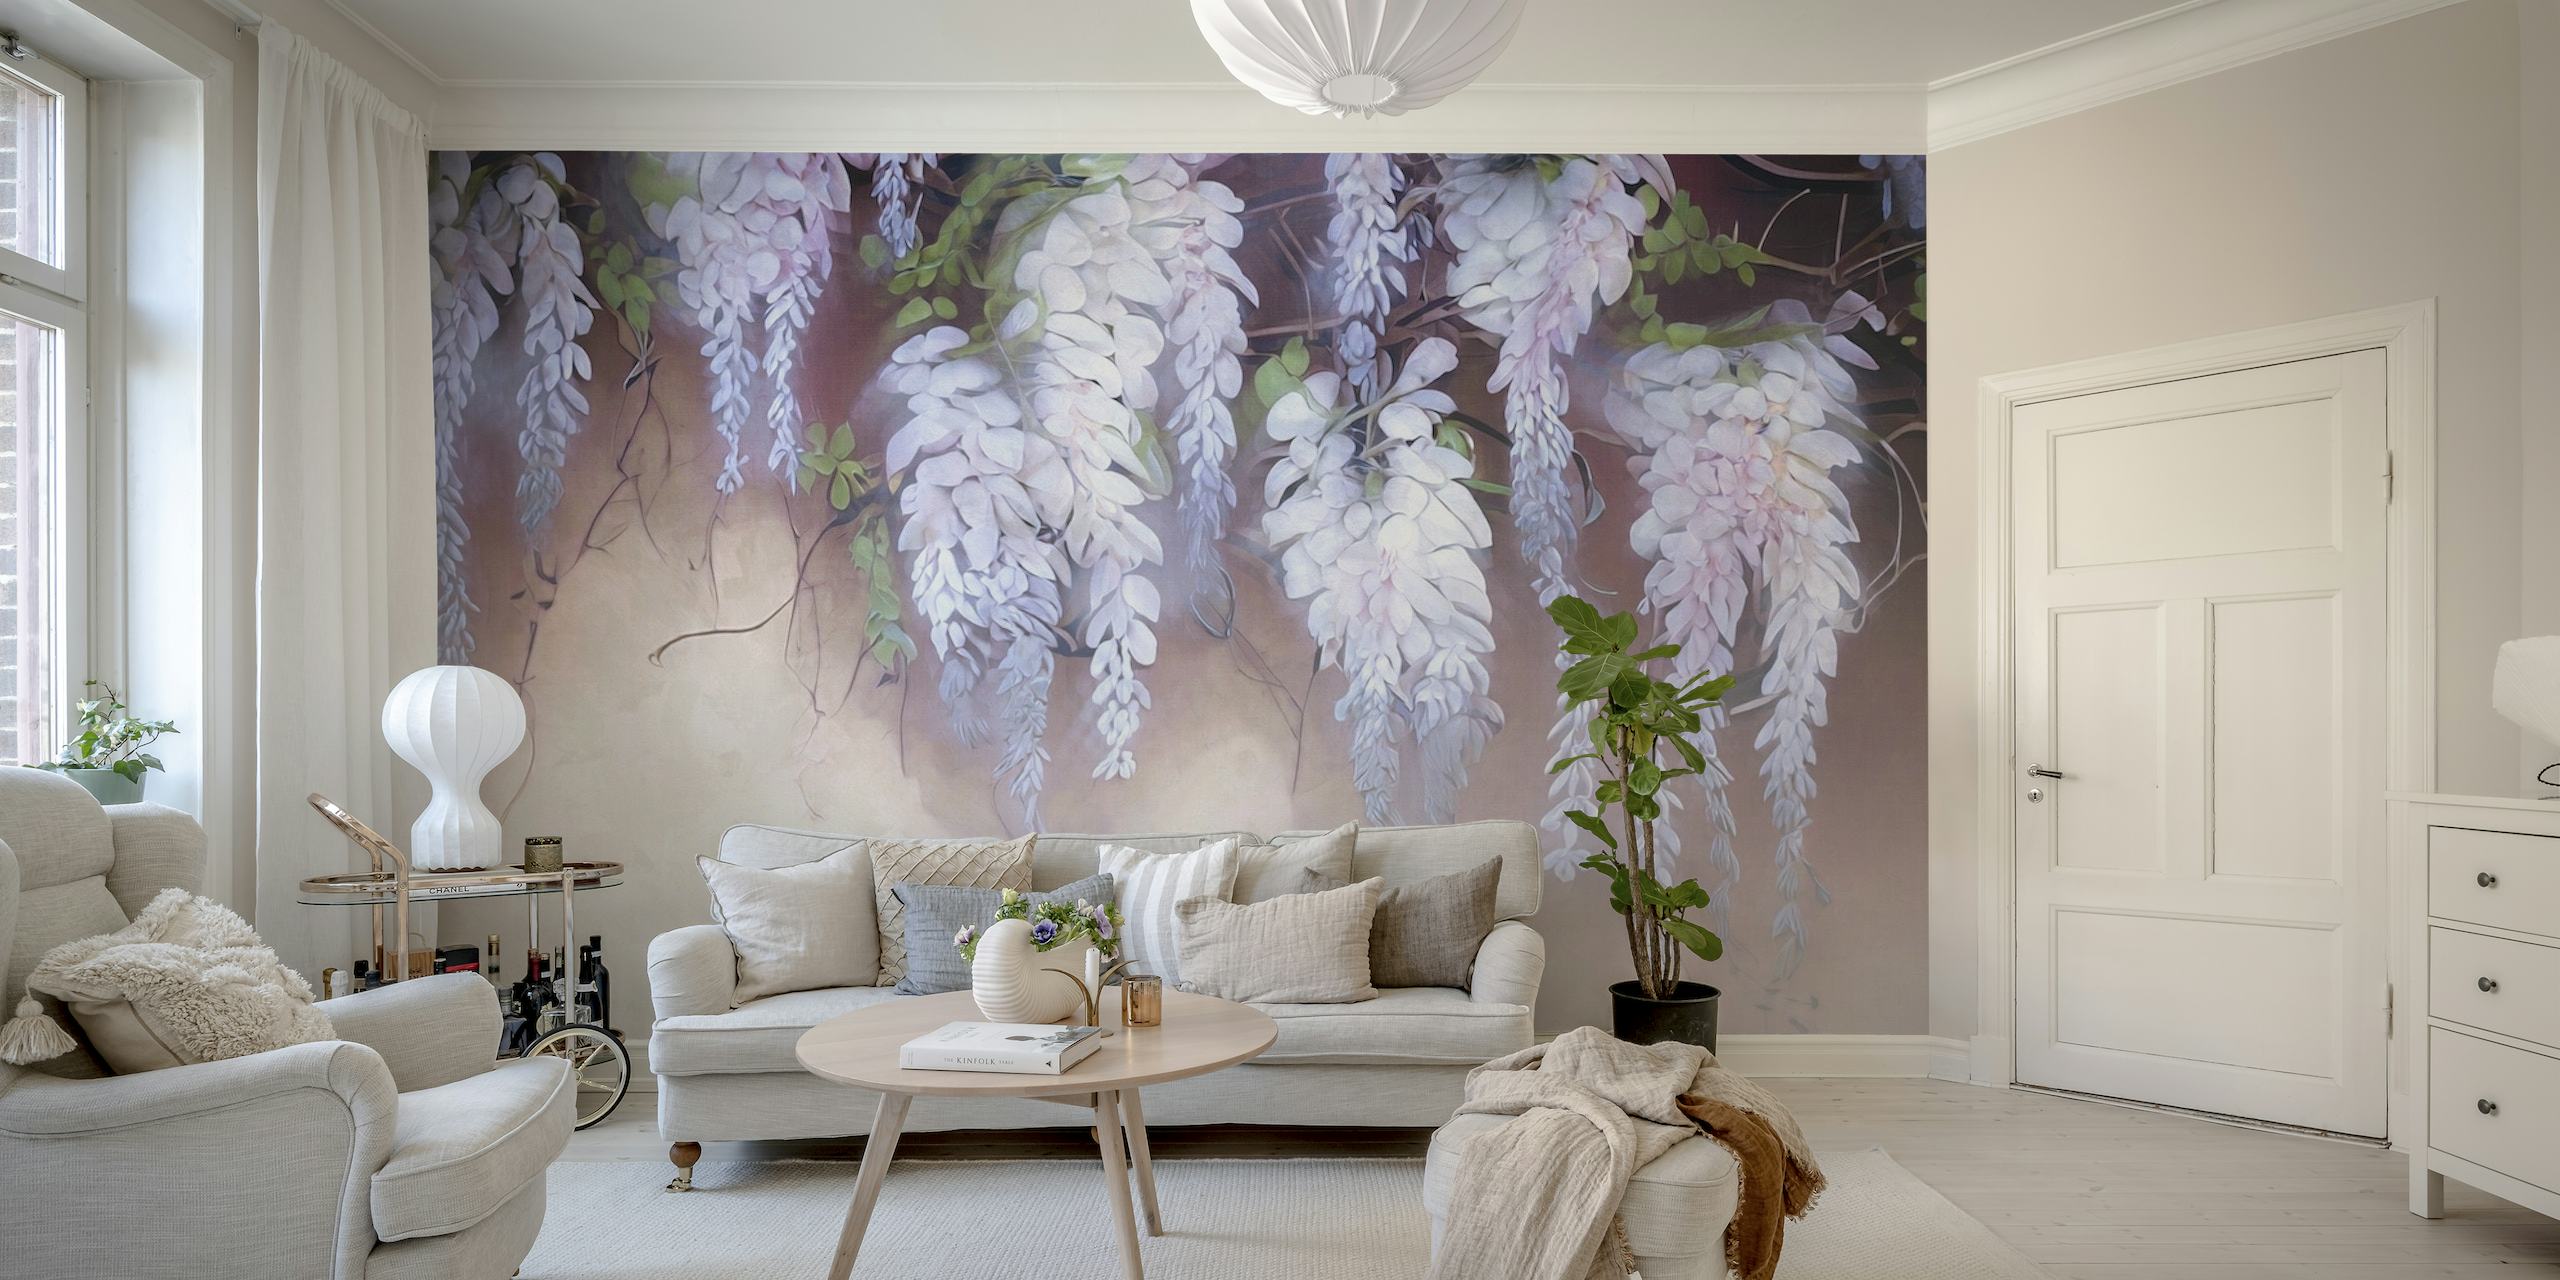 Floral wisteria wall ταπετσαρία